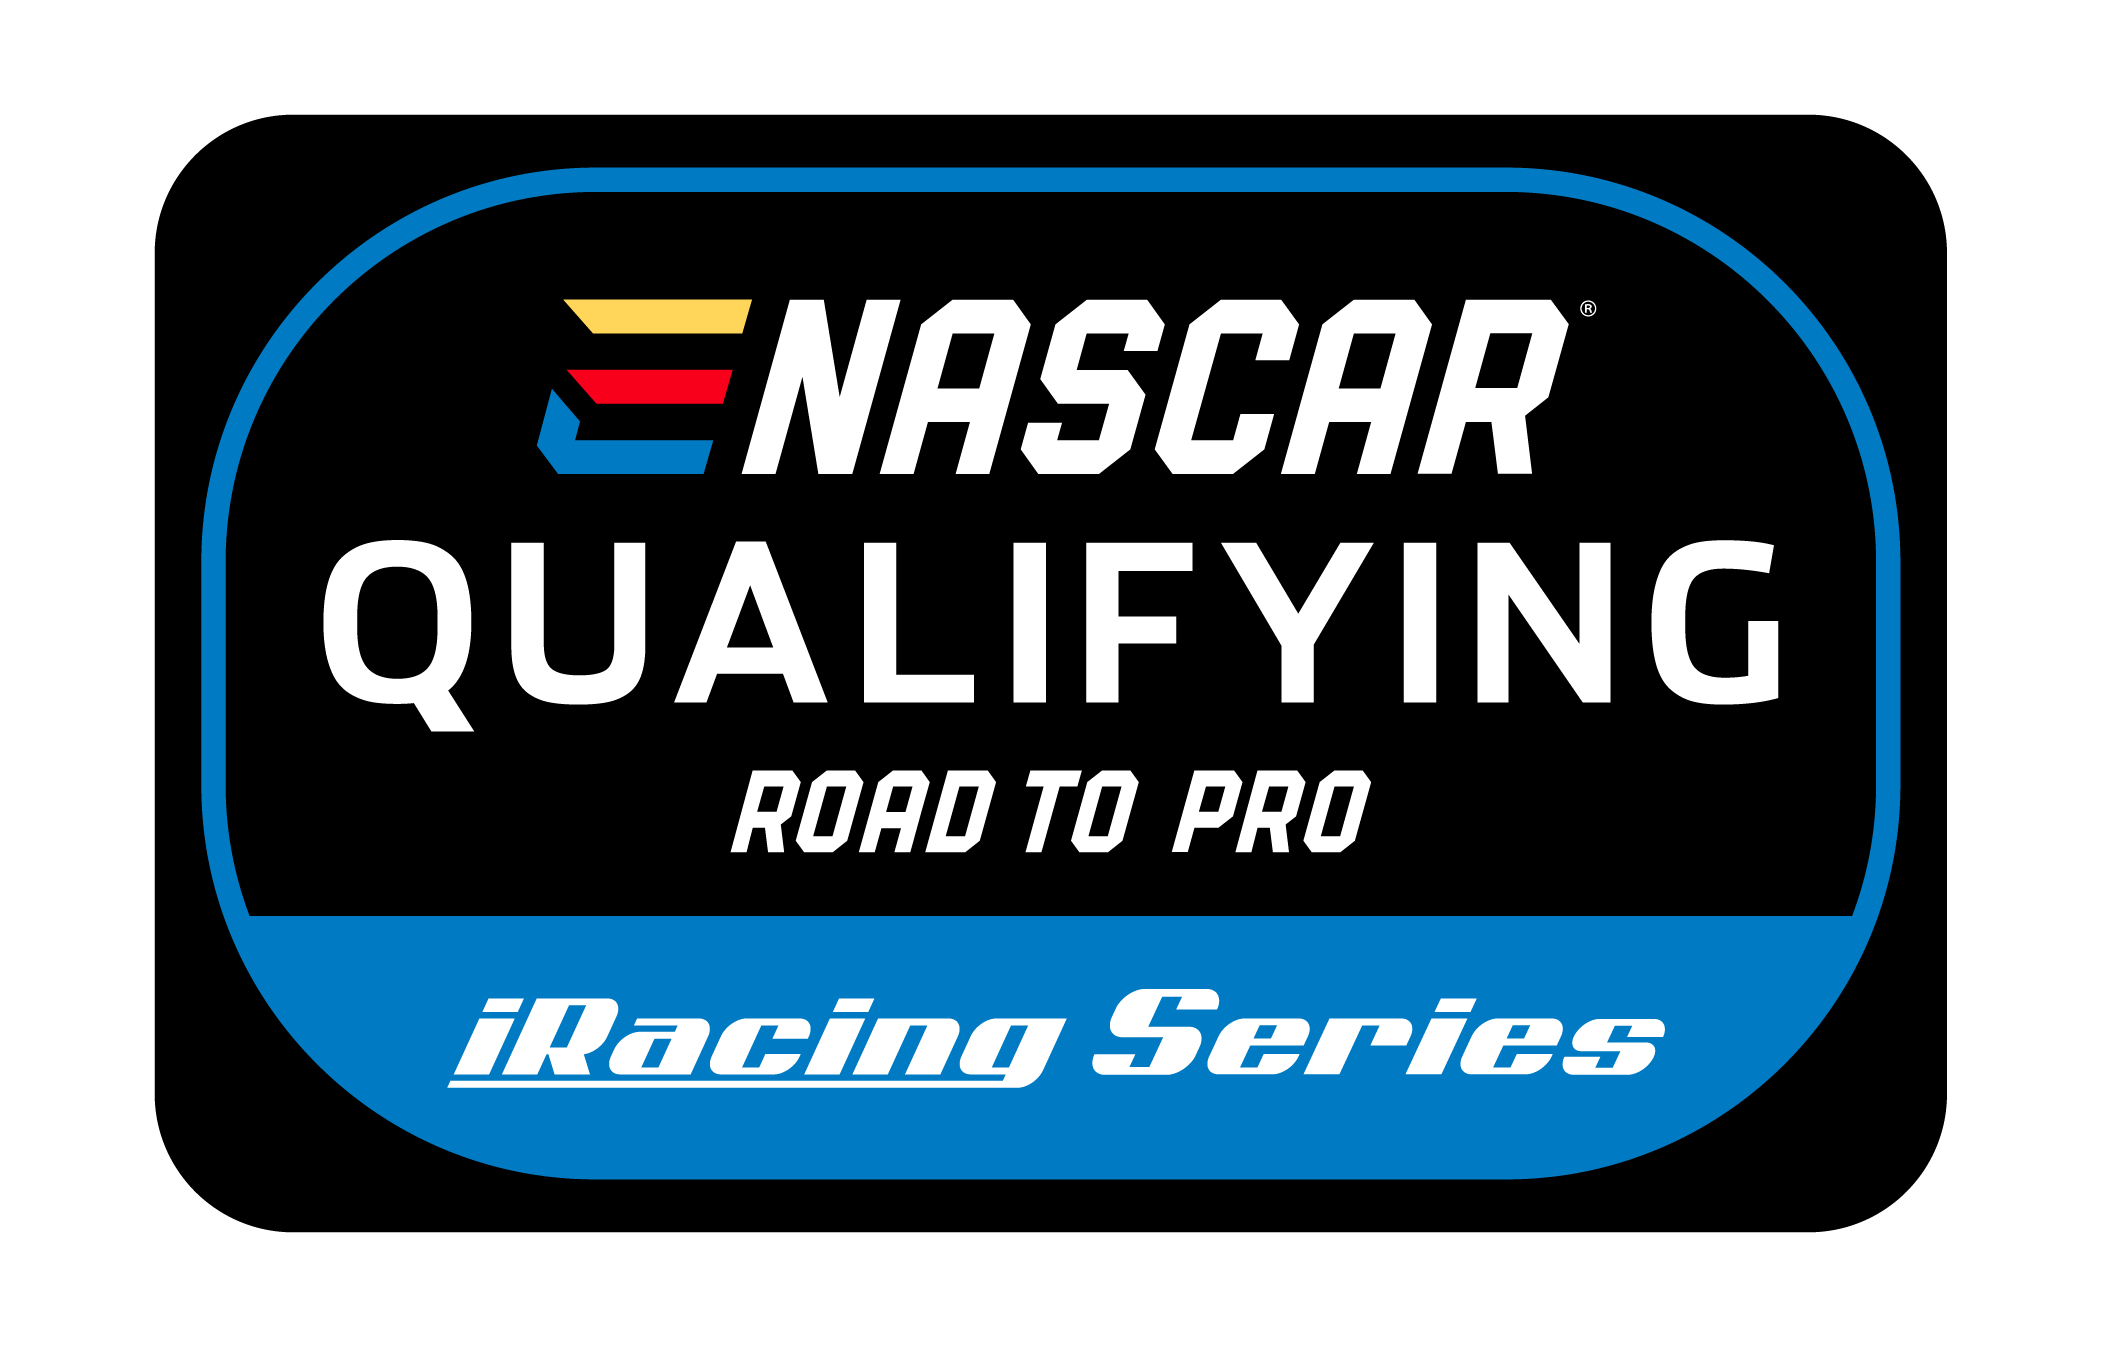 eNASCAR Qualifying Road to Pro iRacing Series